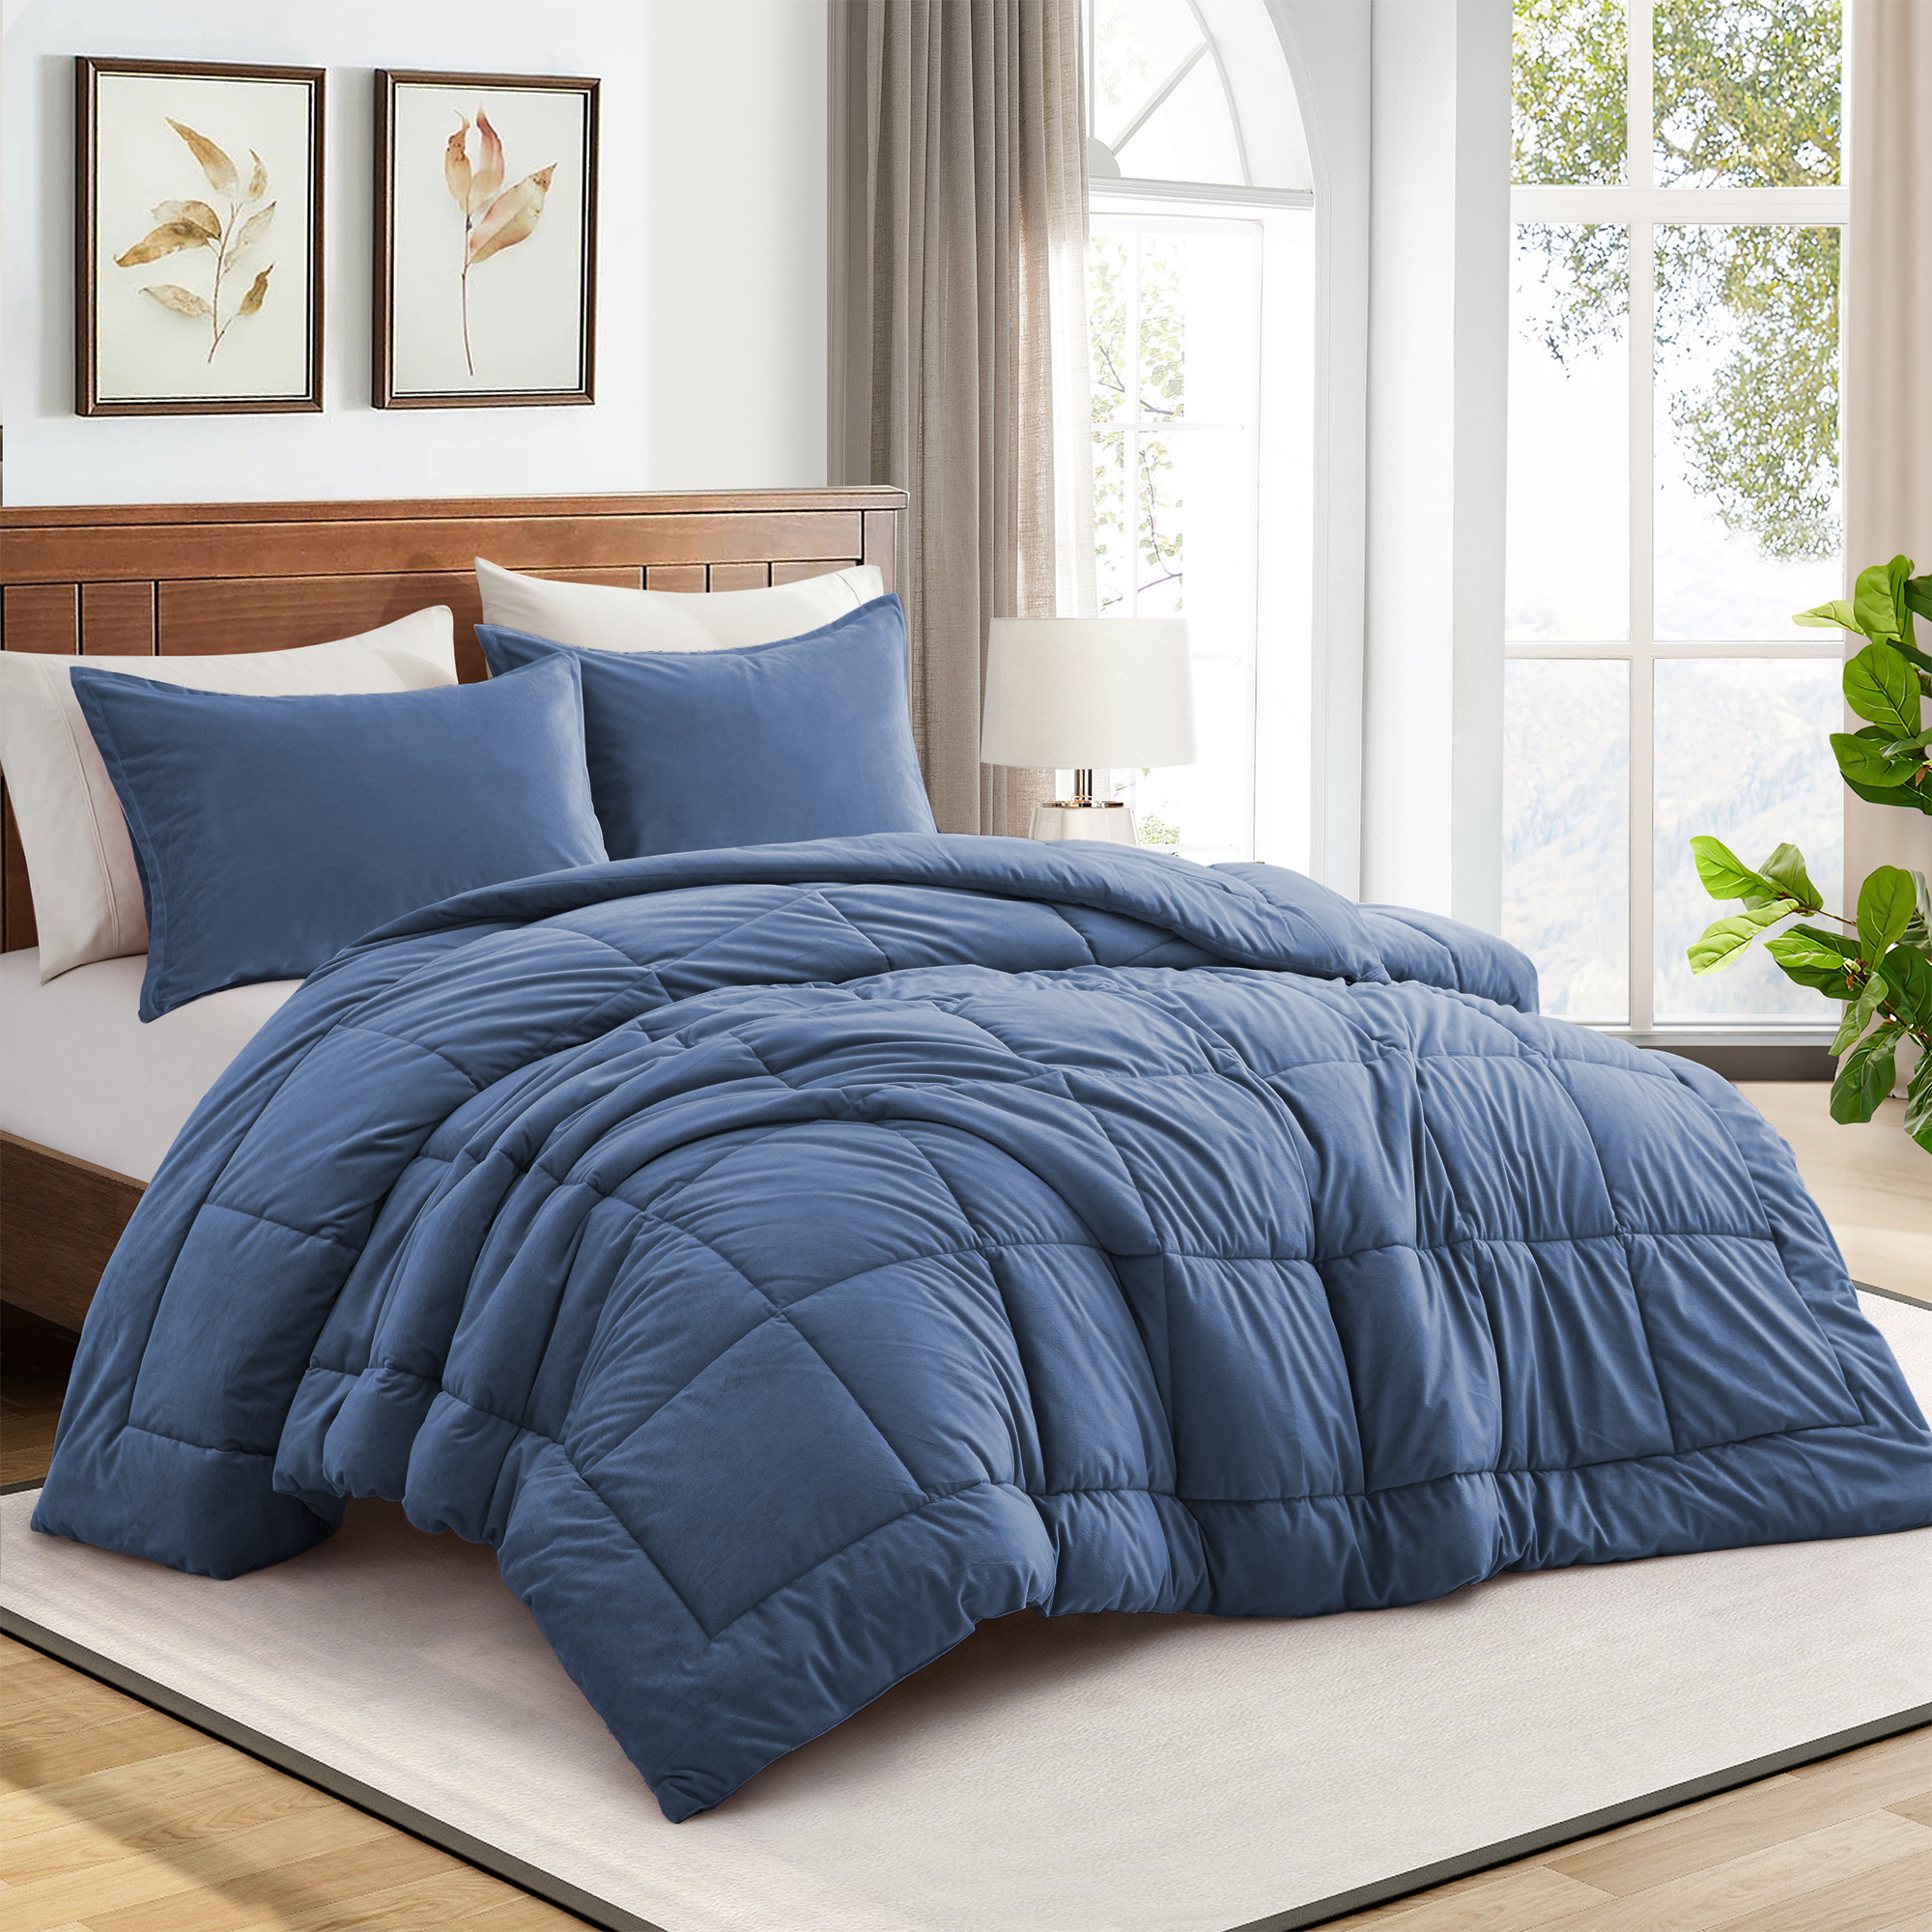 2 Or 3 Pieces Luxury Ultra Soft Velvet Solid Duvet Set-All Season Reversible Down Alternative Comforter Set - Twin Size